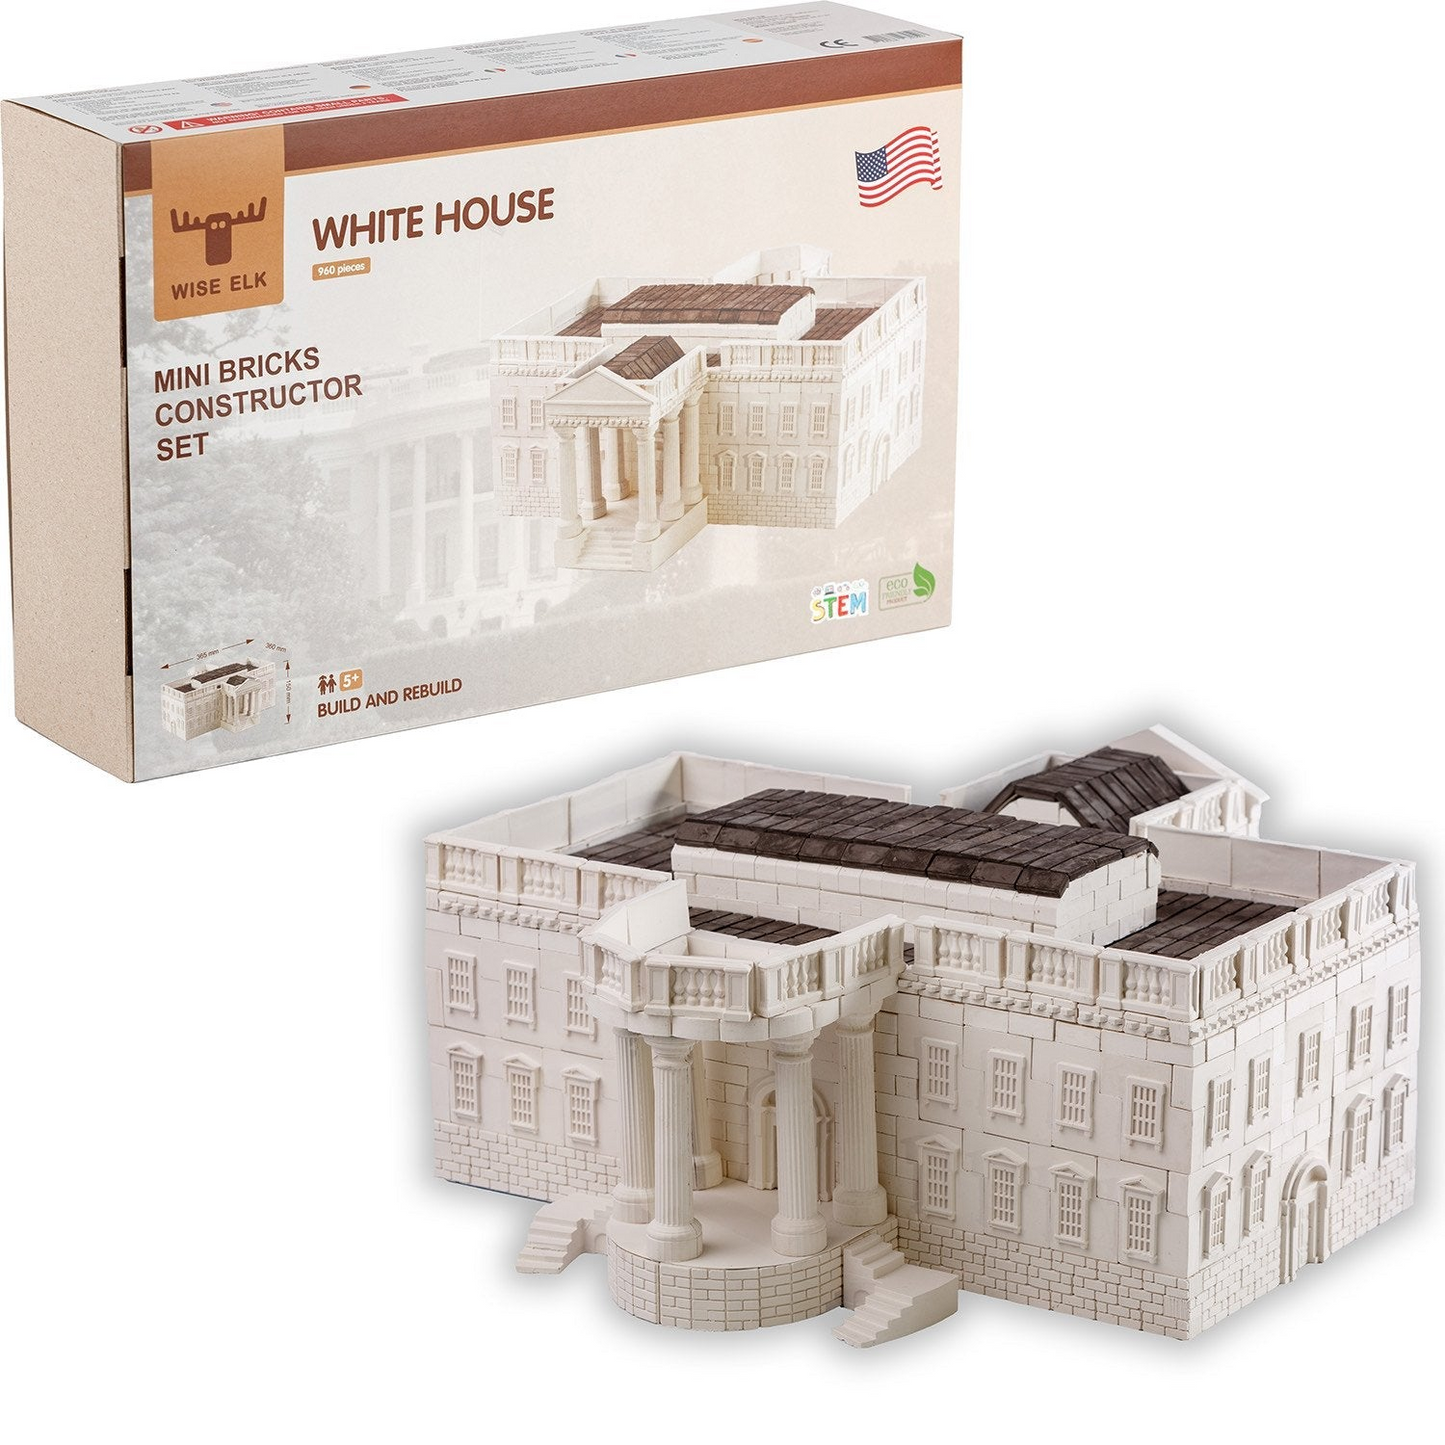 Mini Bricks Construction Set - White House, Goodies N Stuff